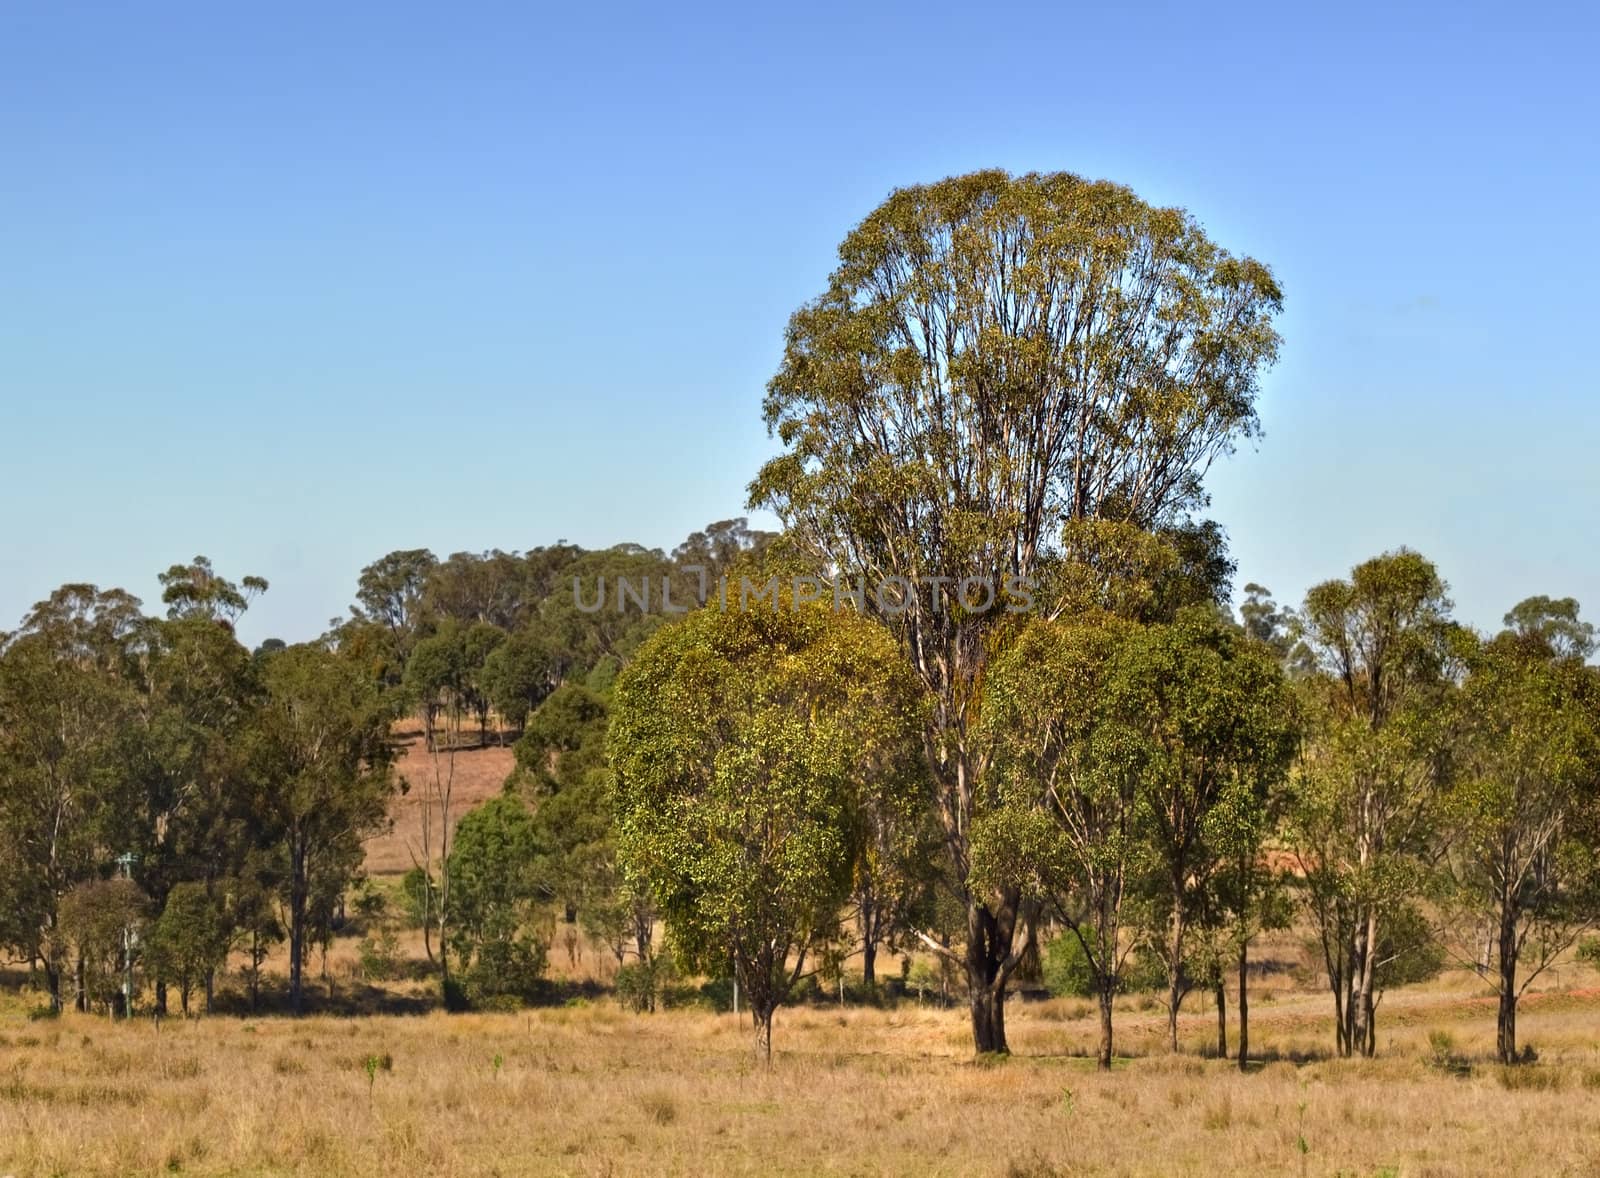 Australian countryside gum trees and blue sky - dry eucalypt forest